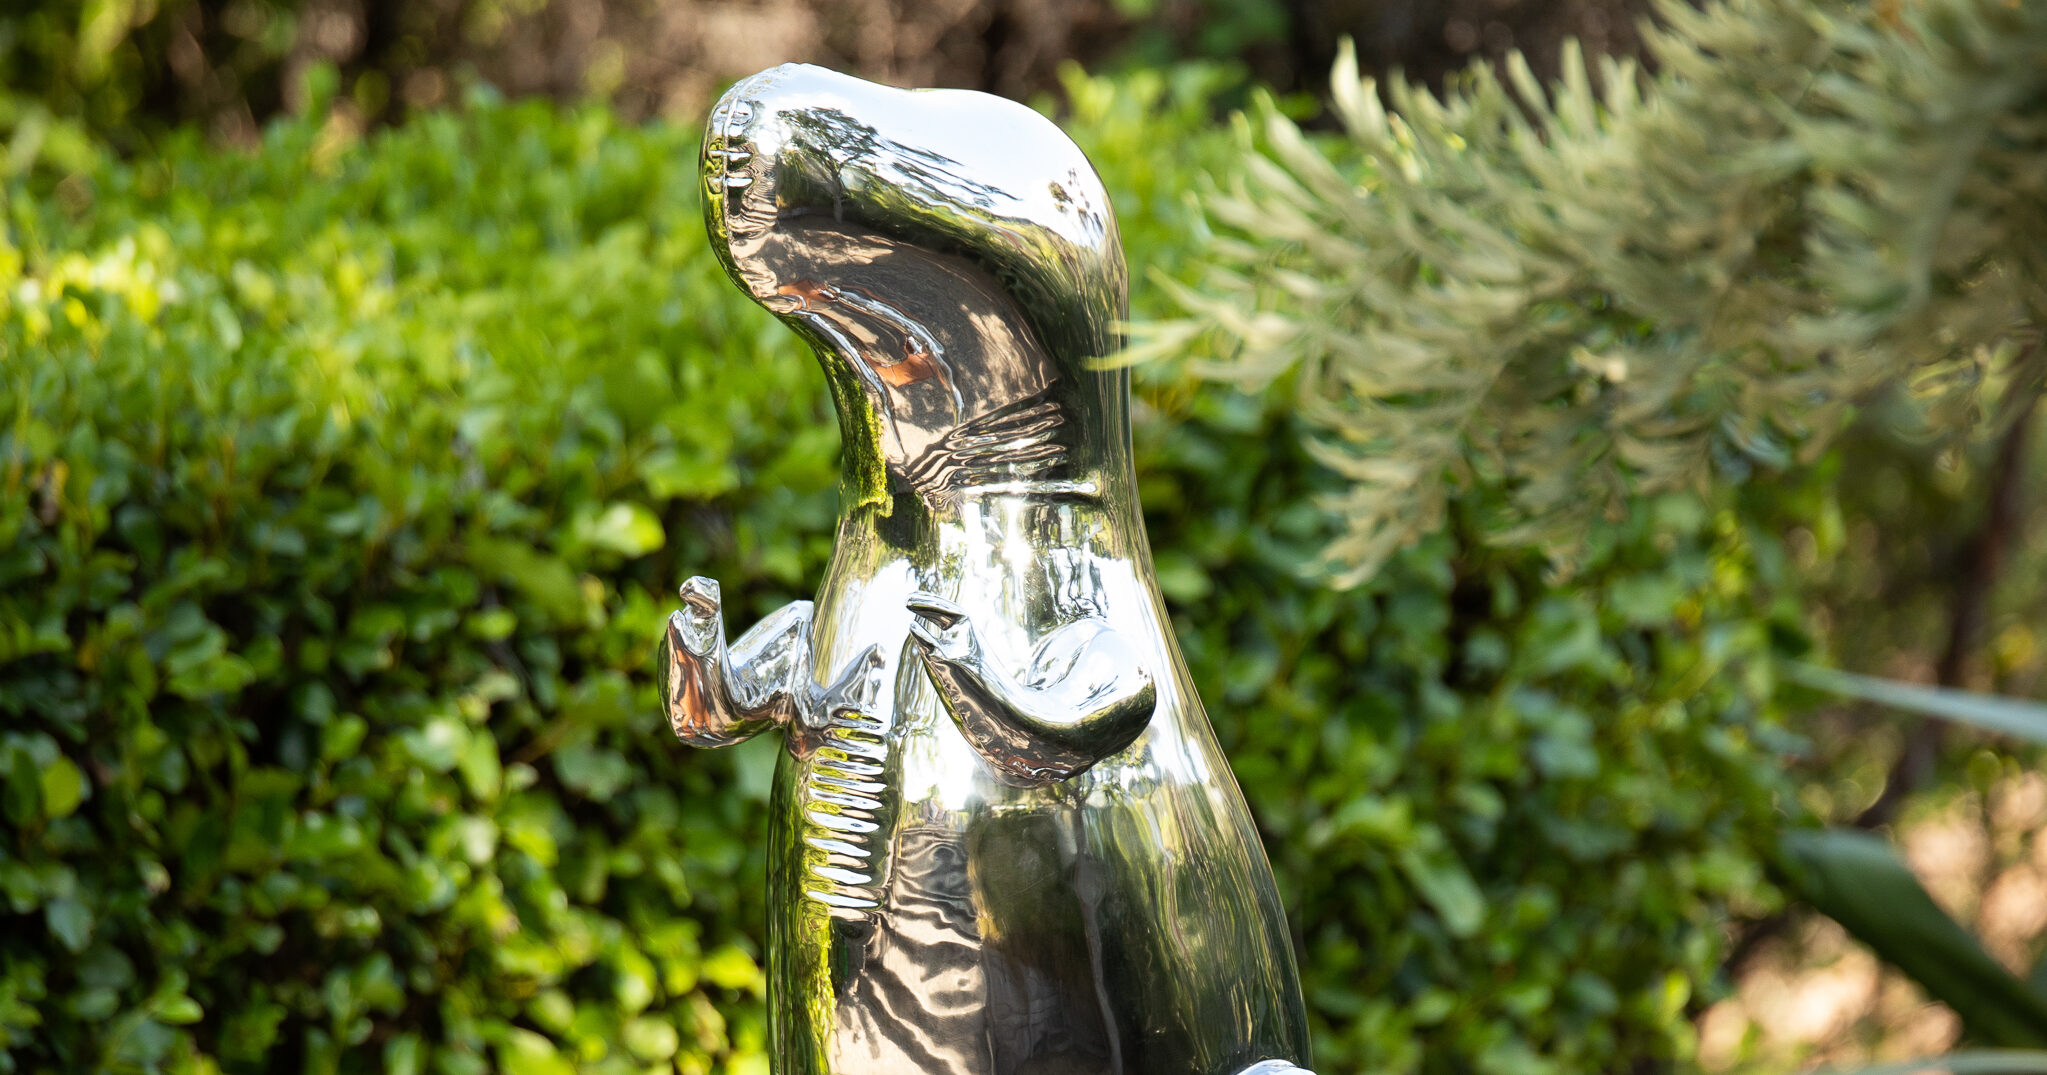 Dinosaur at Brick Bay Sculpture Trail, New Zealand